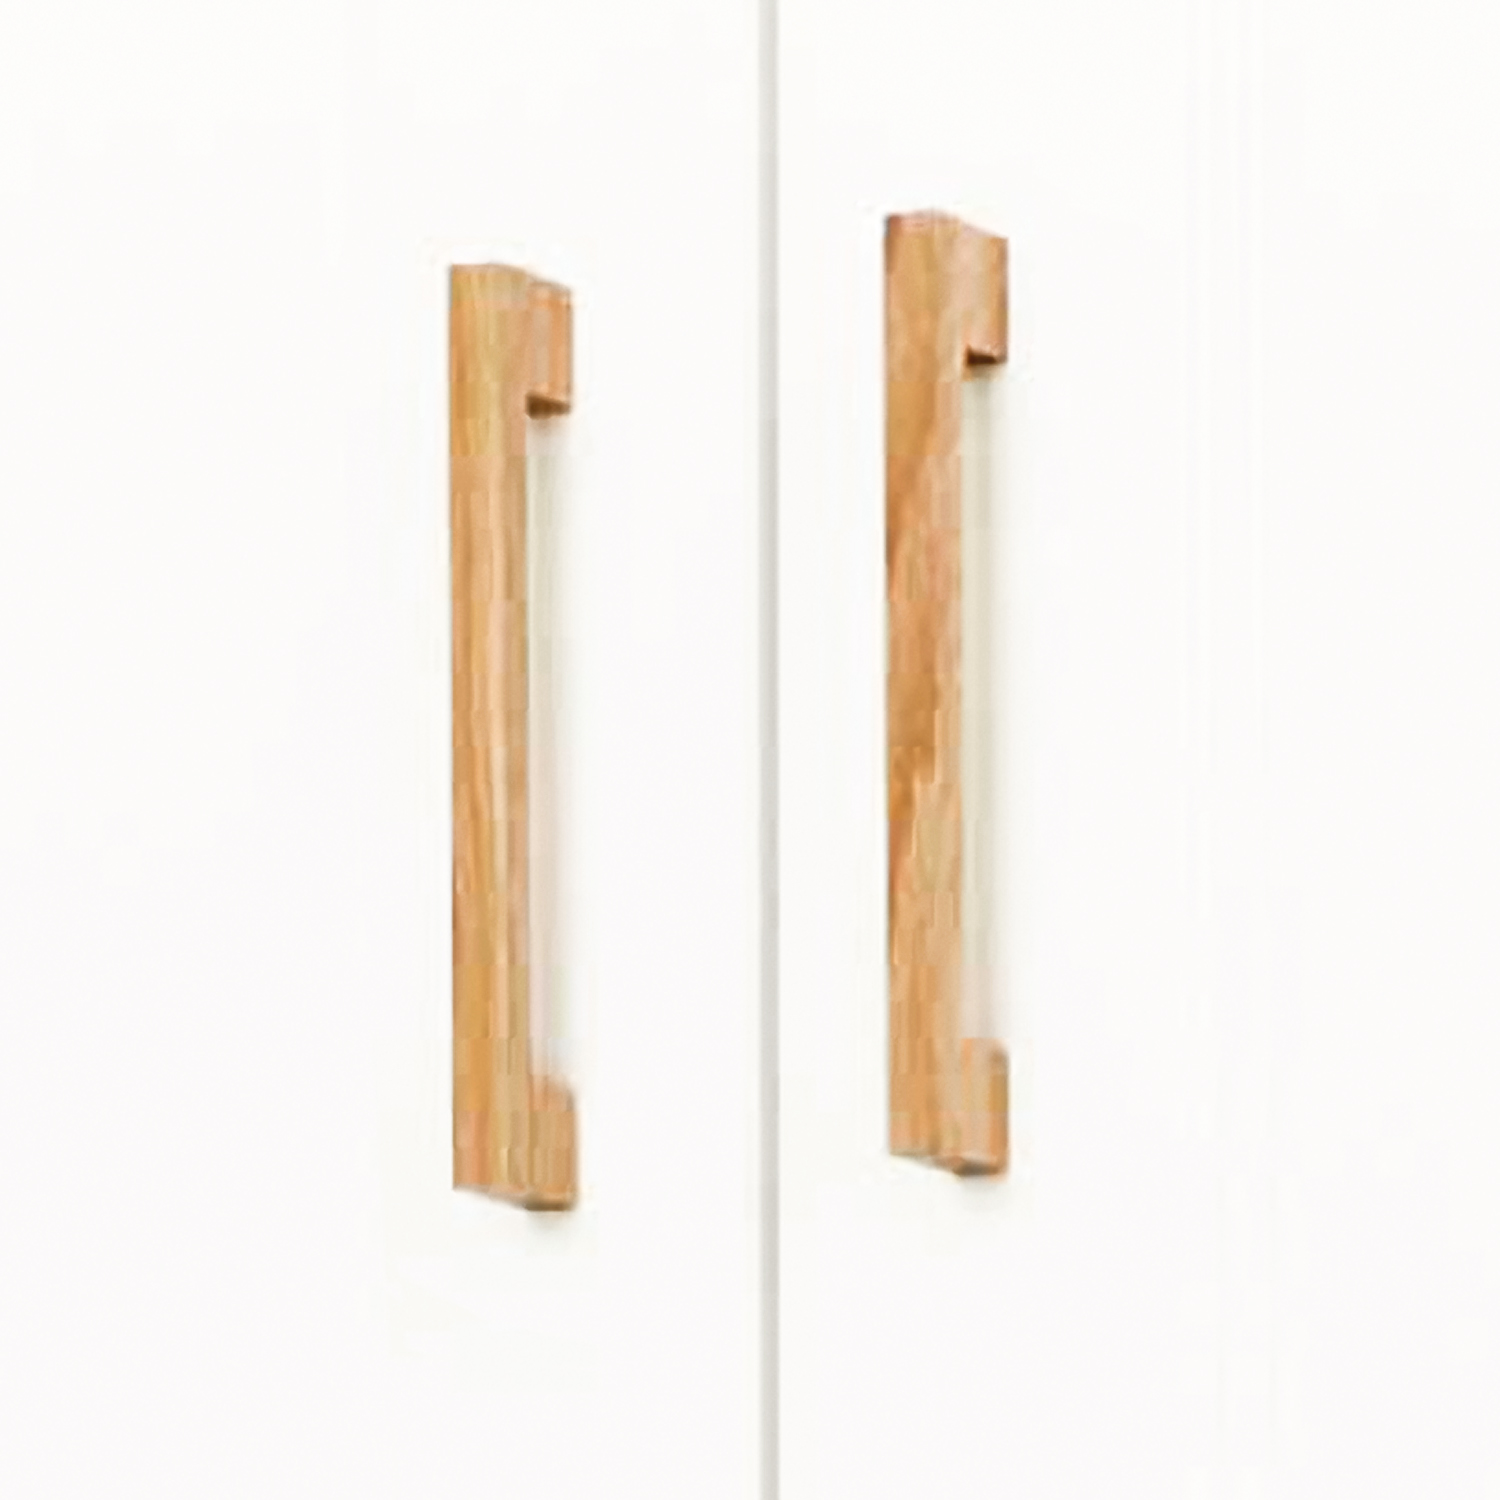 Kethy-Timber-Handles-1500pxls.jpg